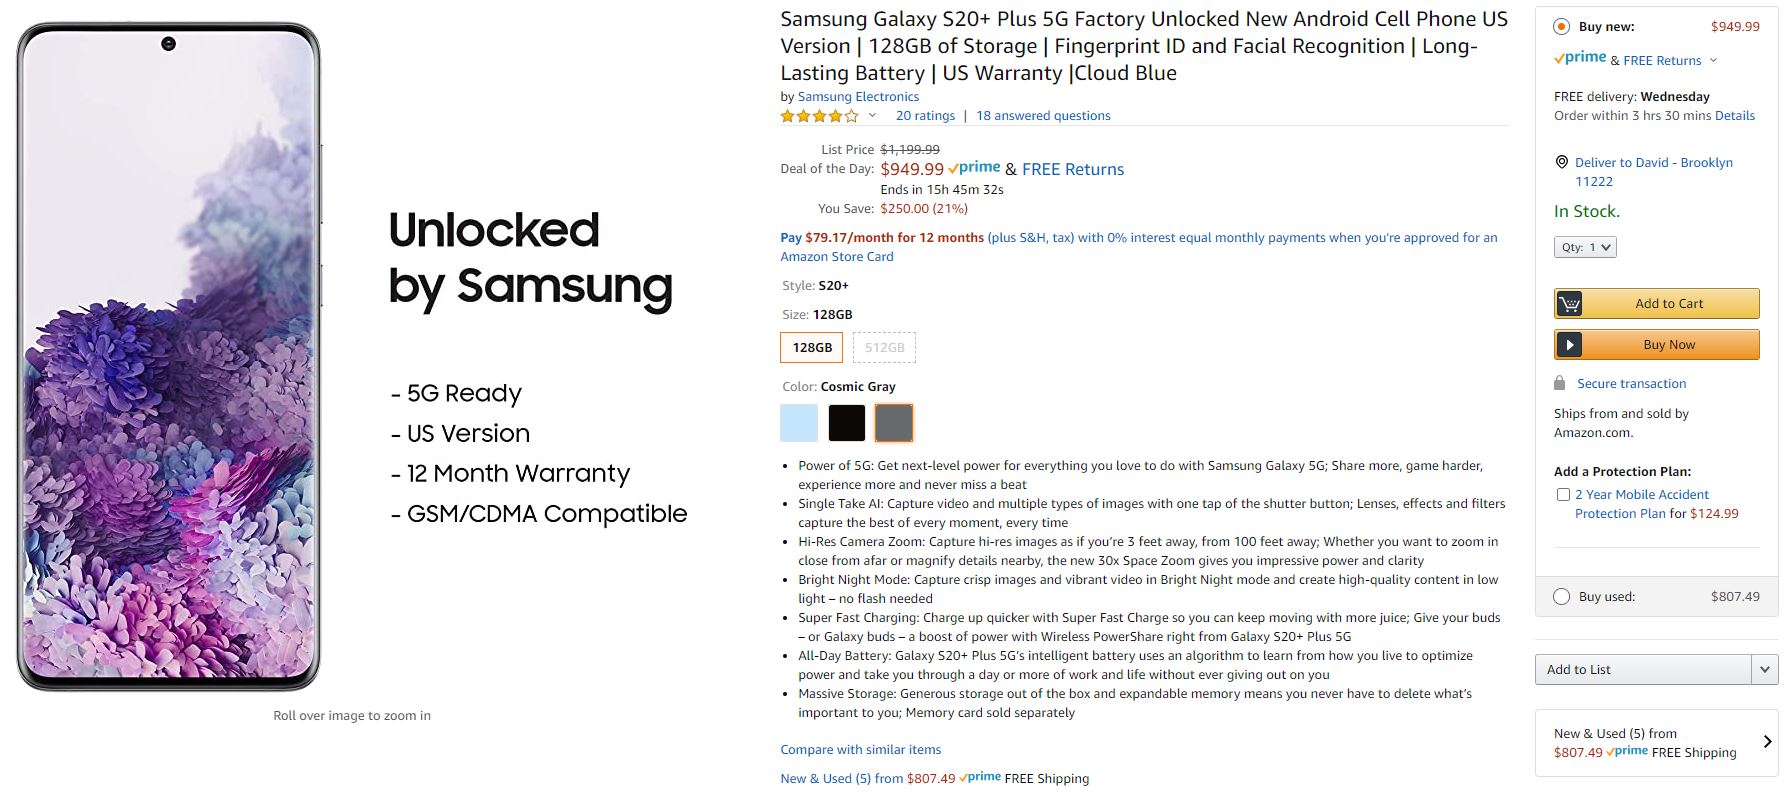 Samsung Galaxy S20 Plus Amazon Deal